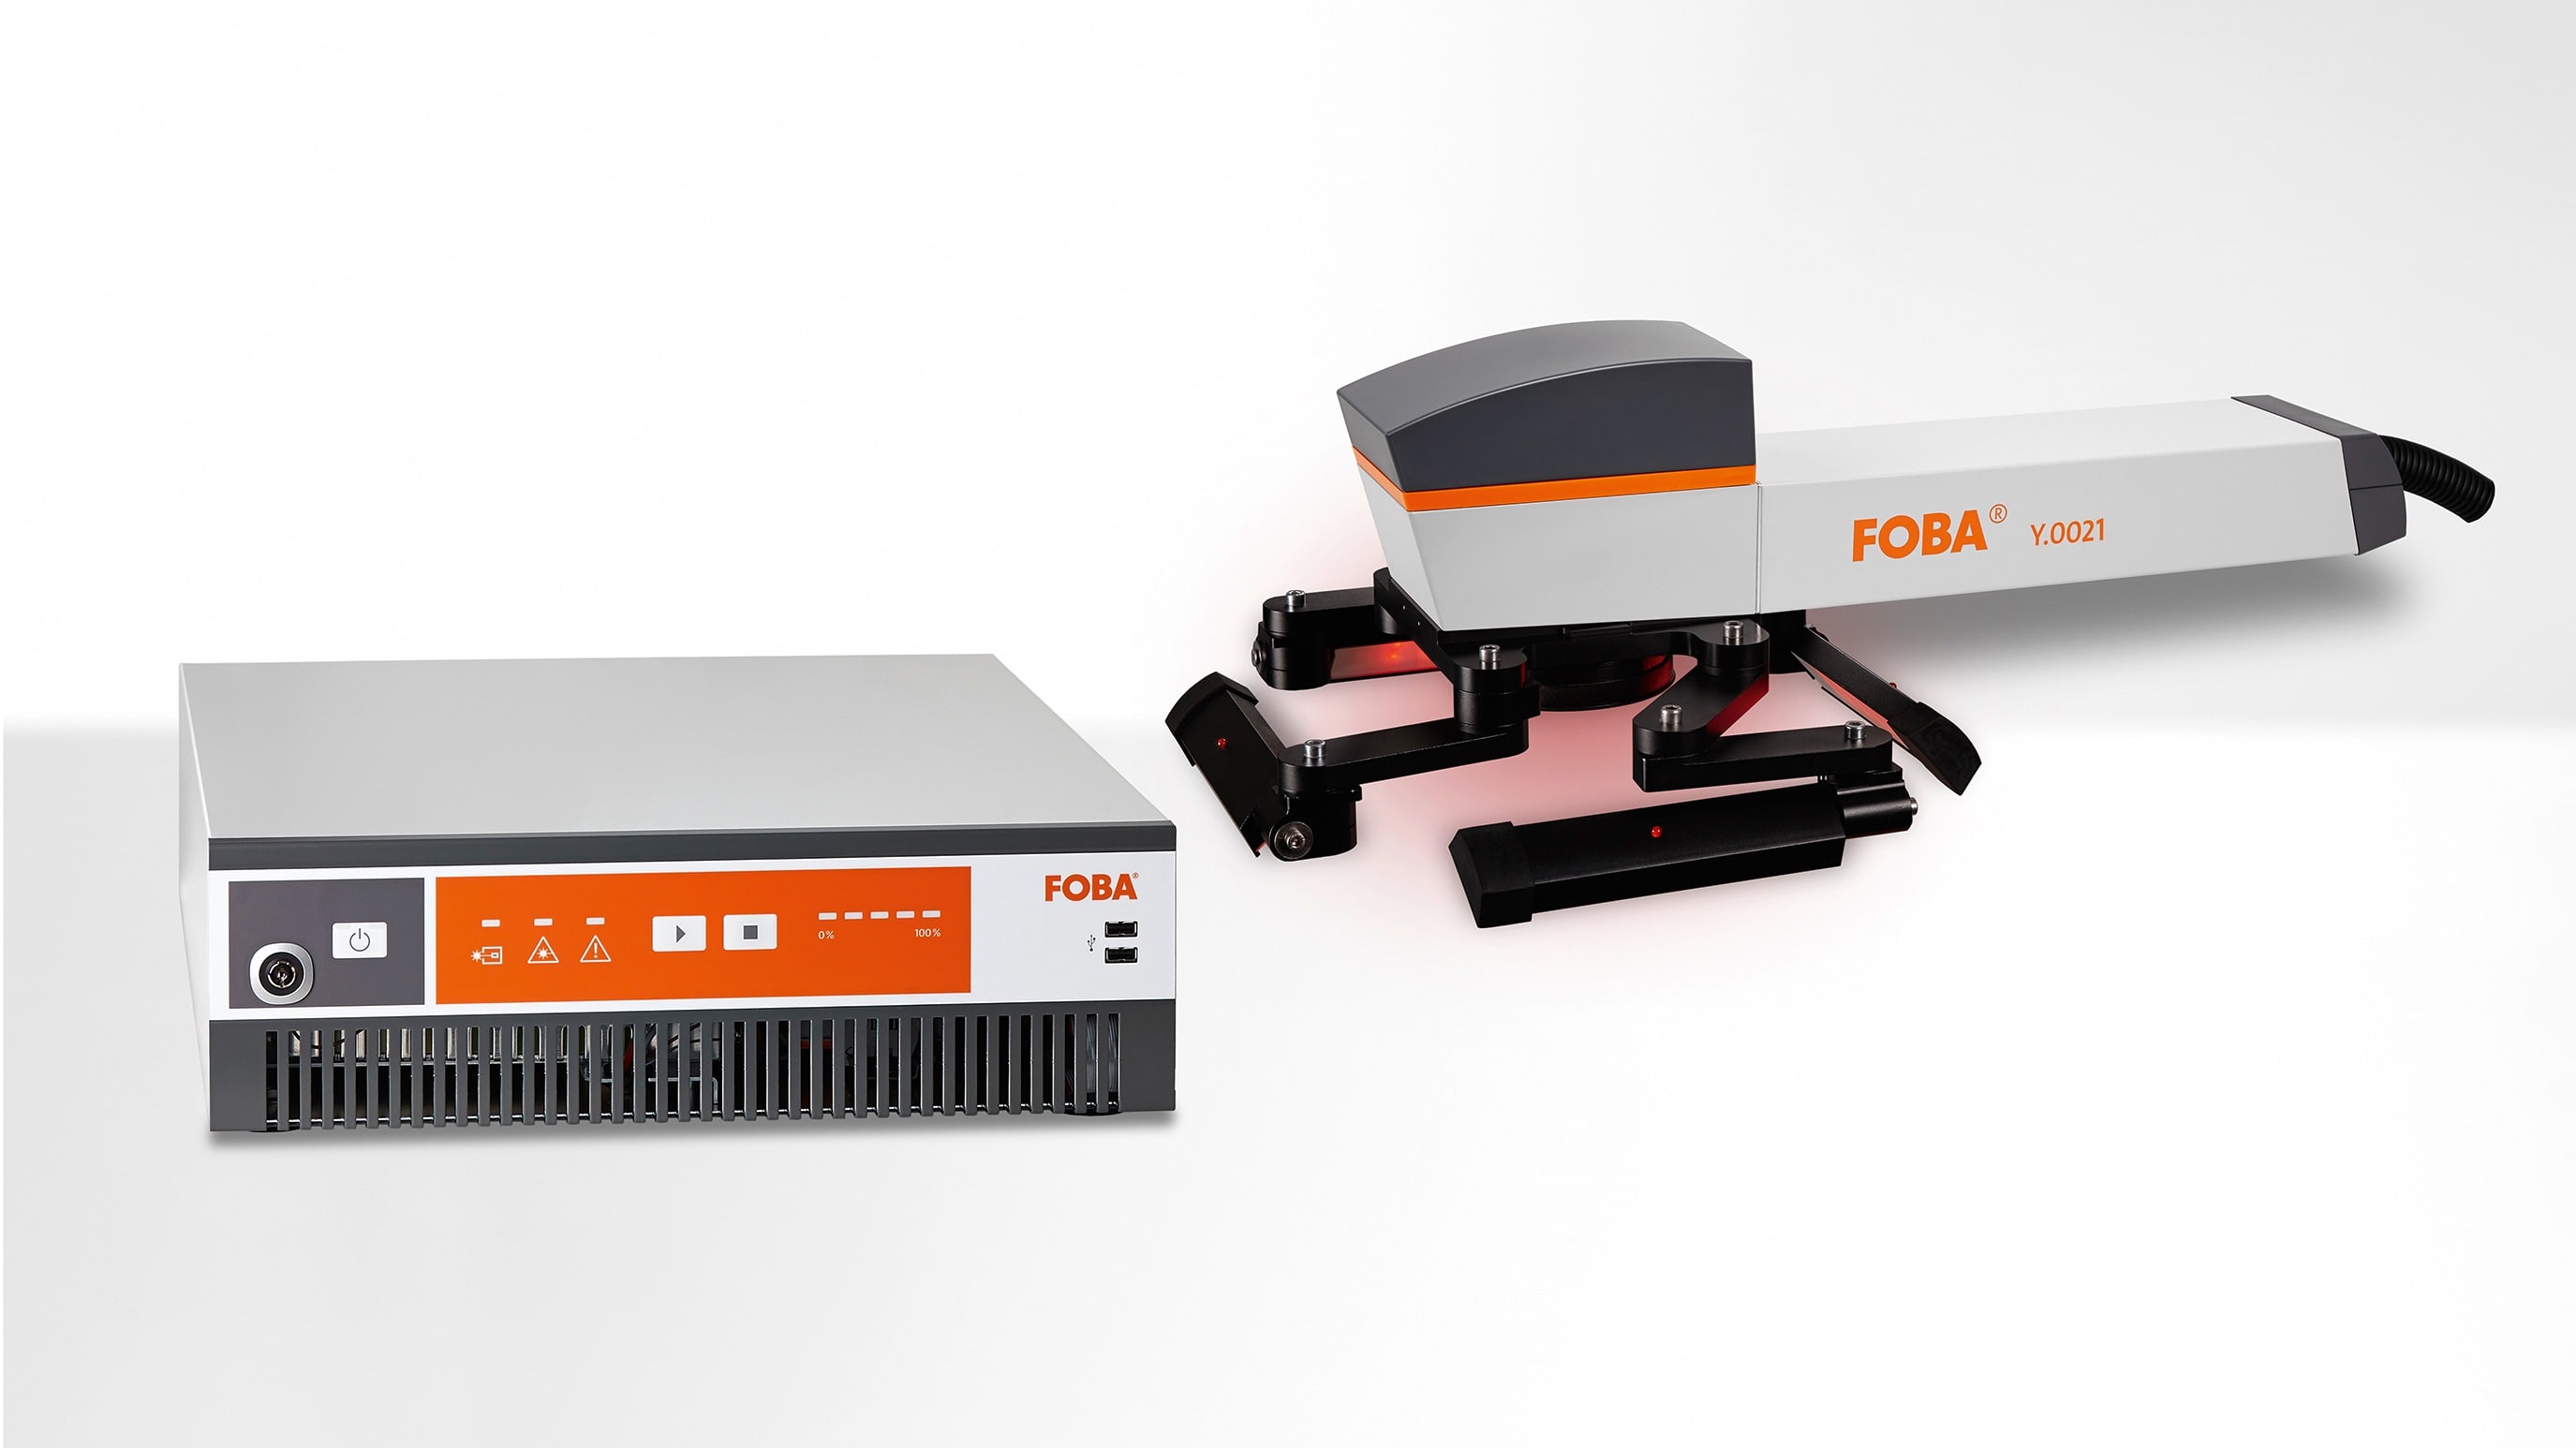 FOBA Y.0201 fiber laser marking system: control unit and marking head.